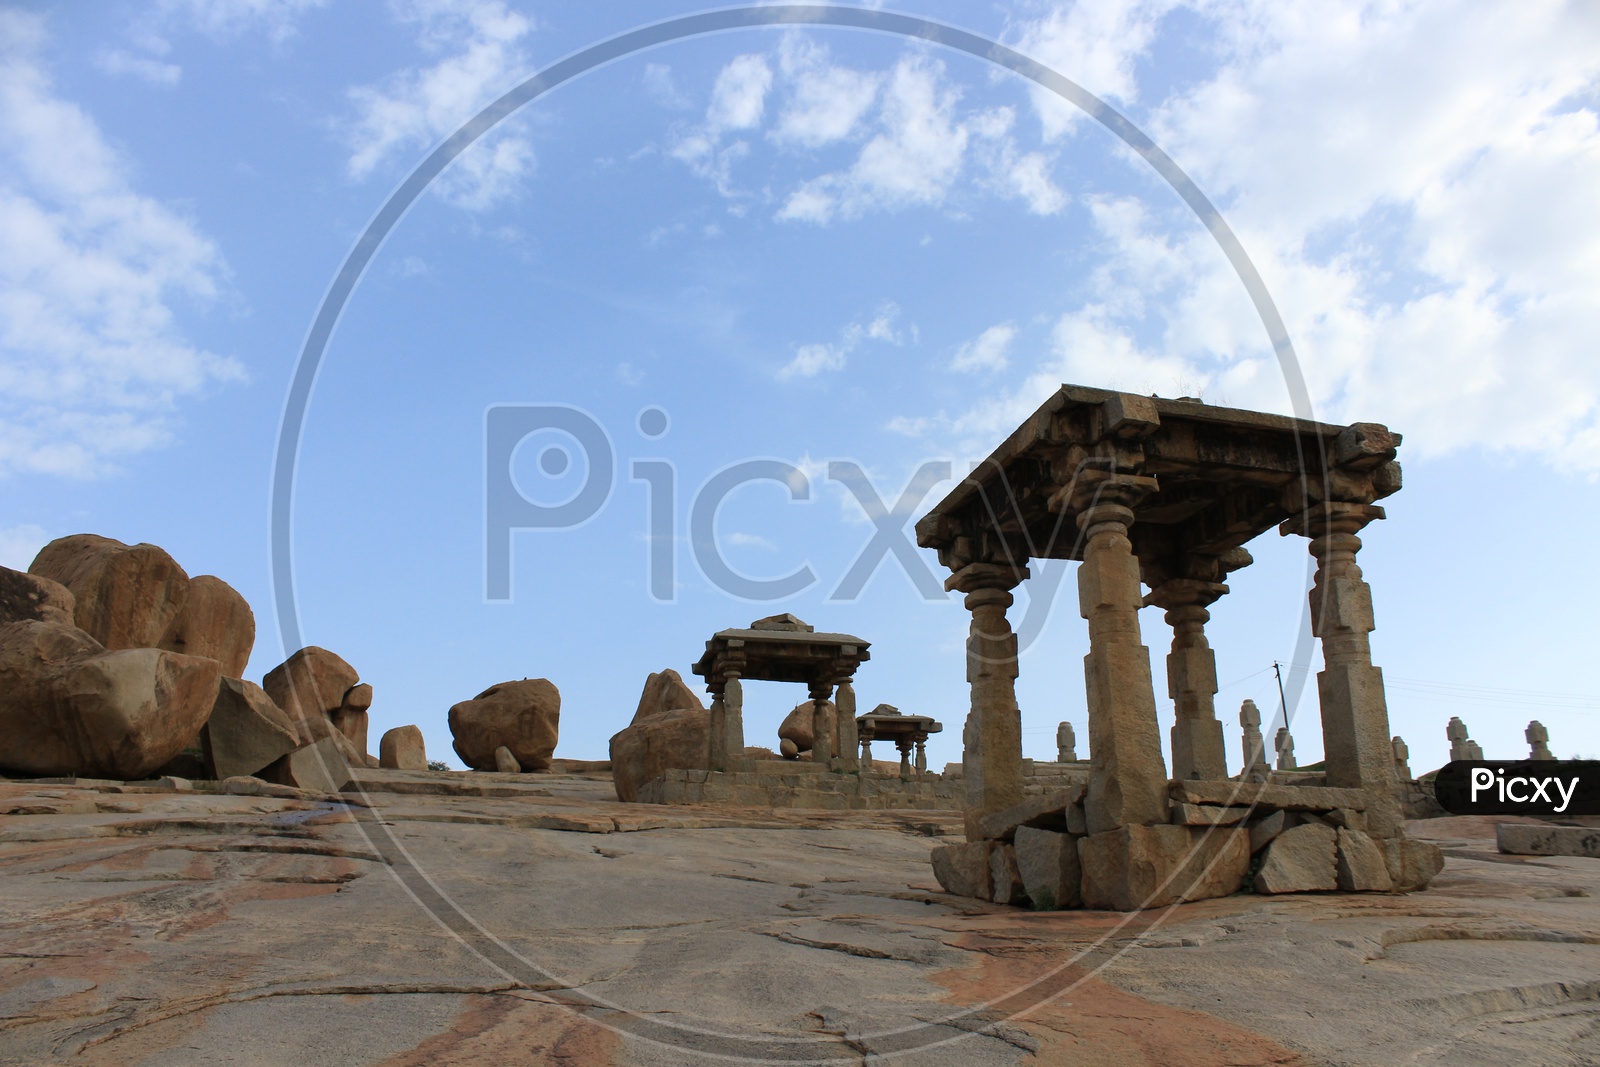 Historical Architecture of Hampi / Temples of Hampi